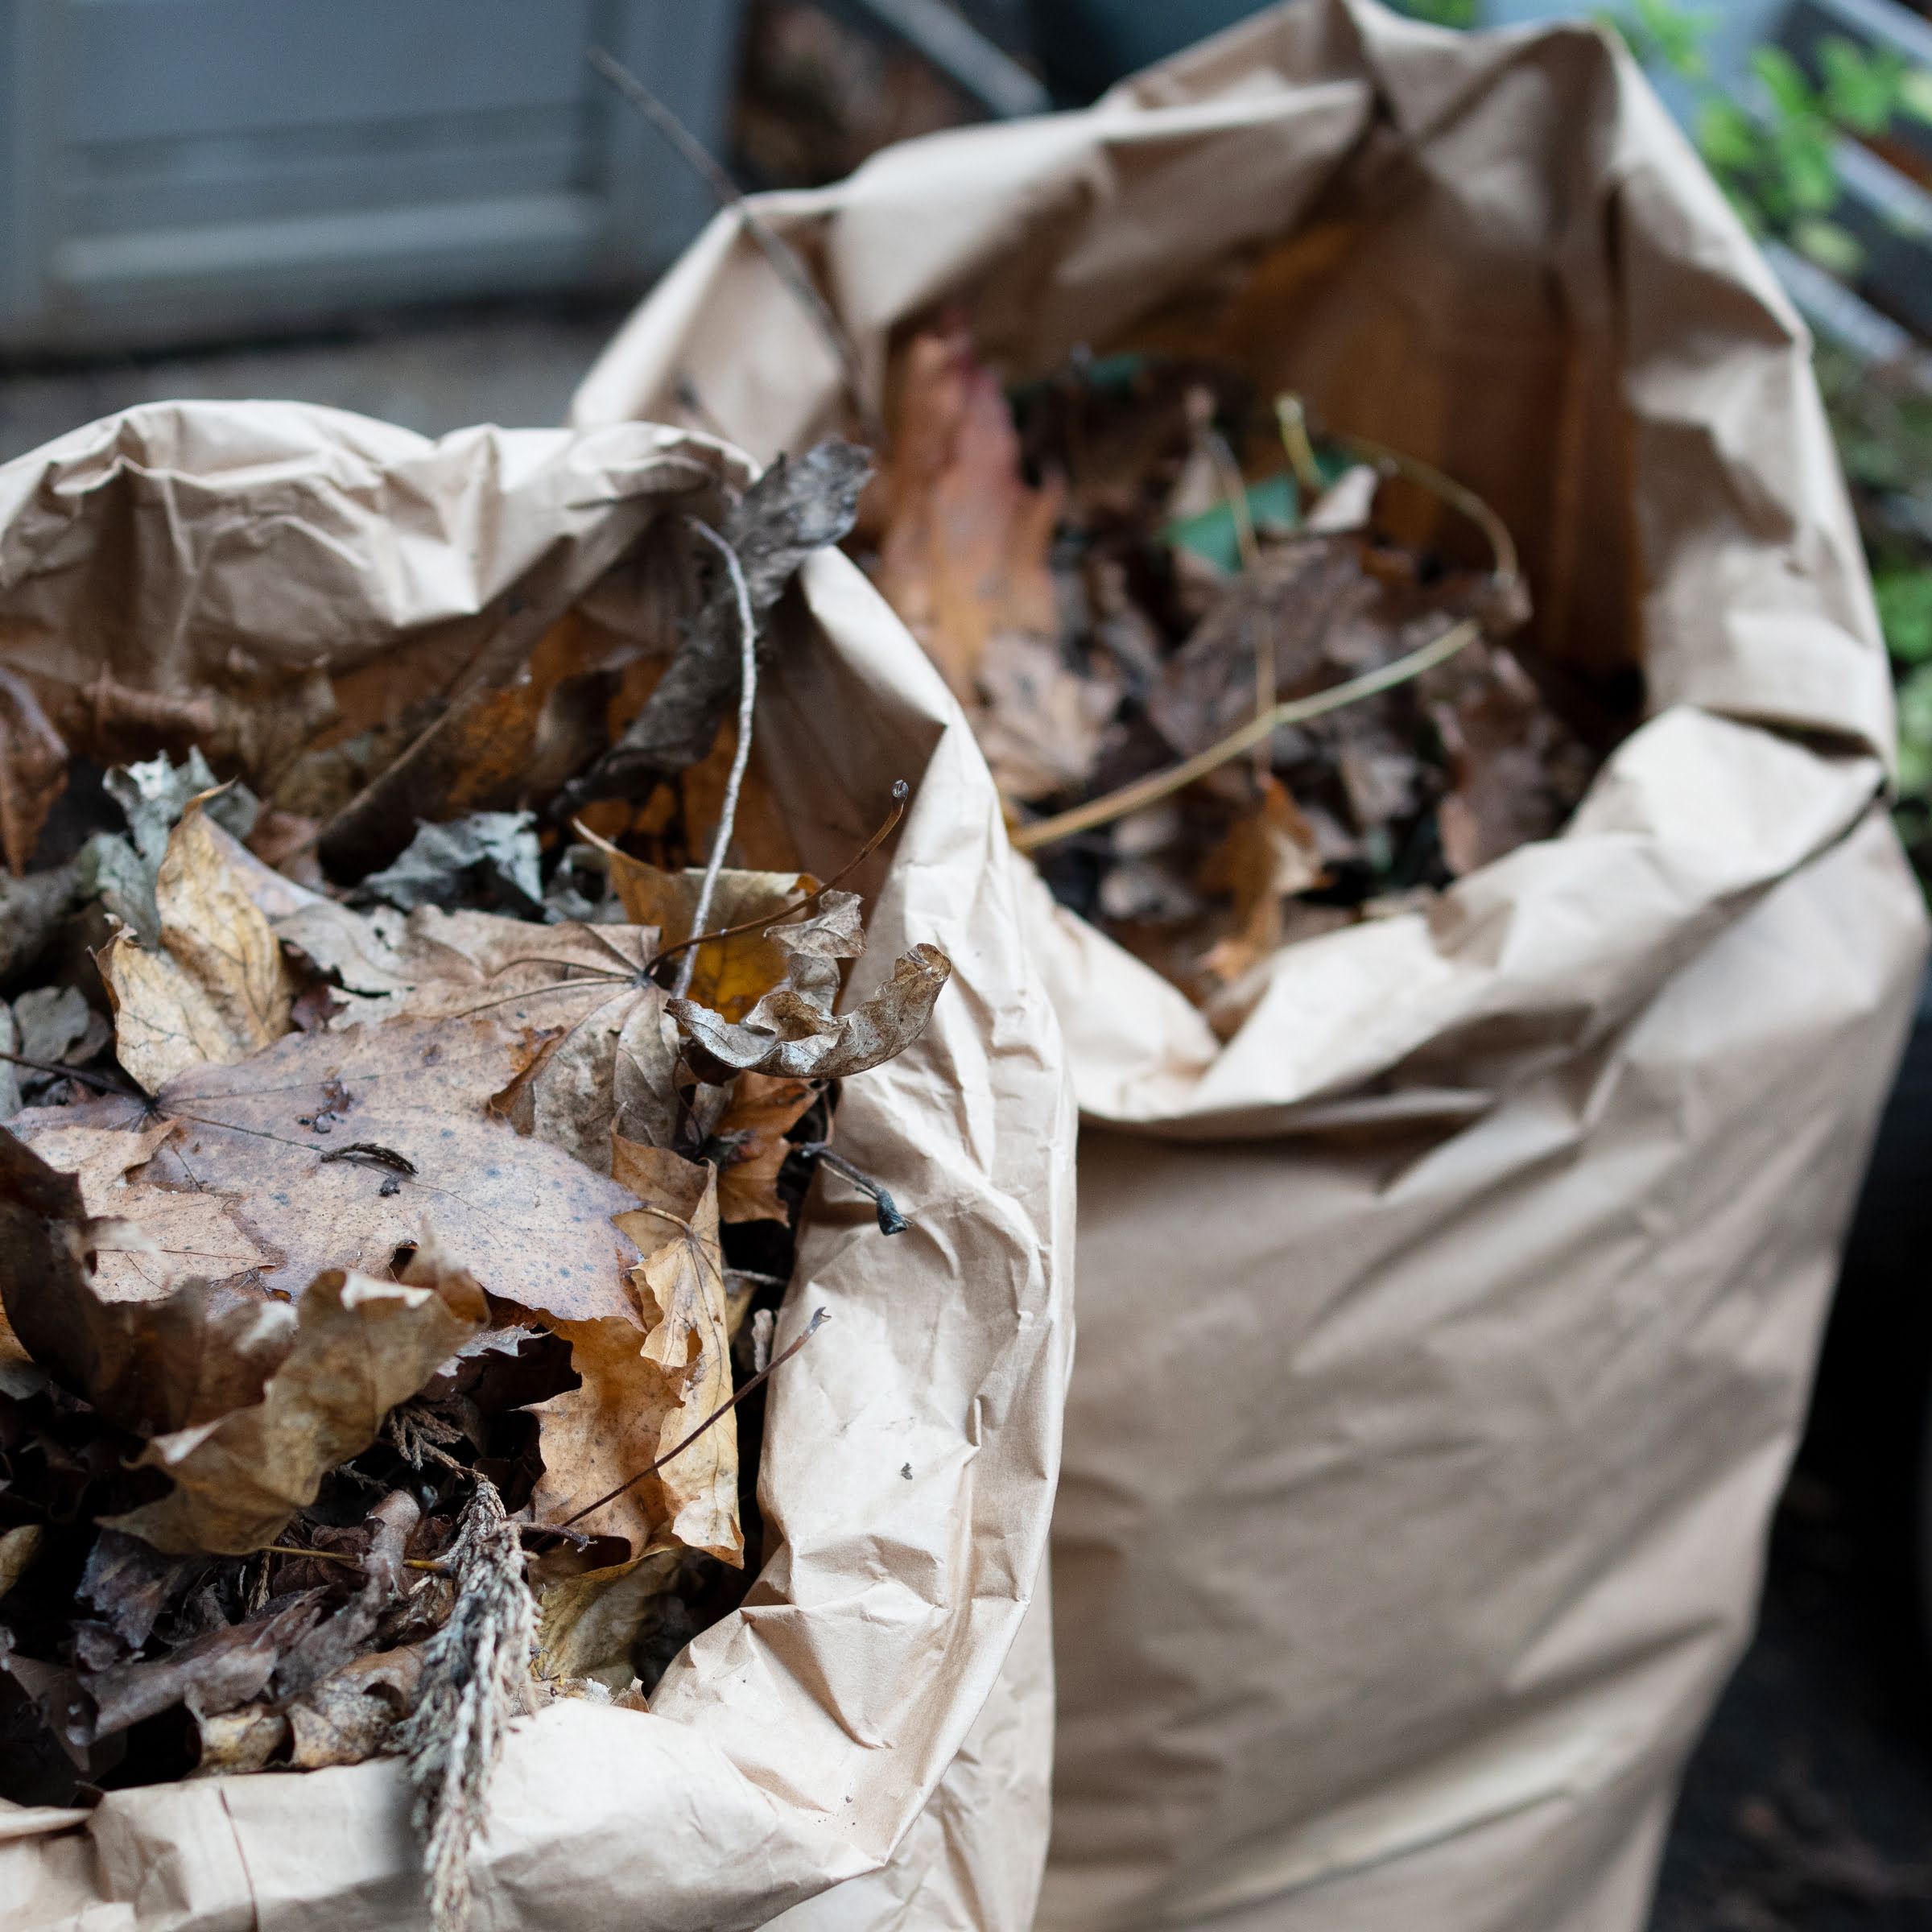 https://www.greenerlyfe.com/wp-content/uploads/2021/09/Composable-Garden-Waste-Bags-2.jpg